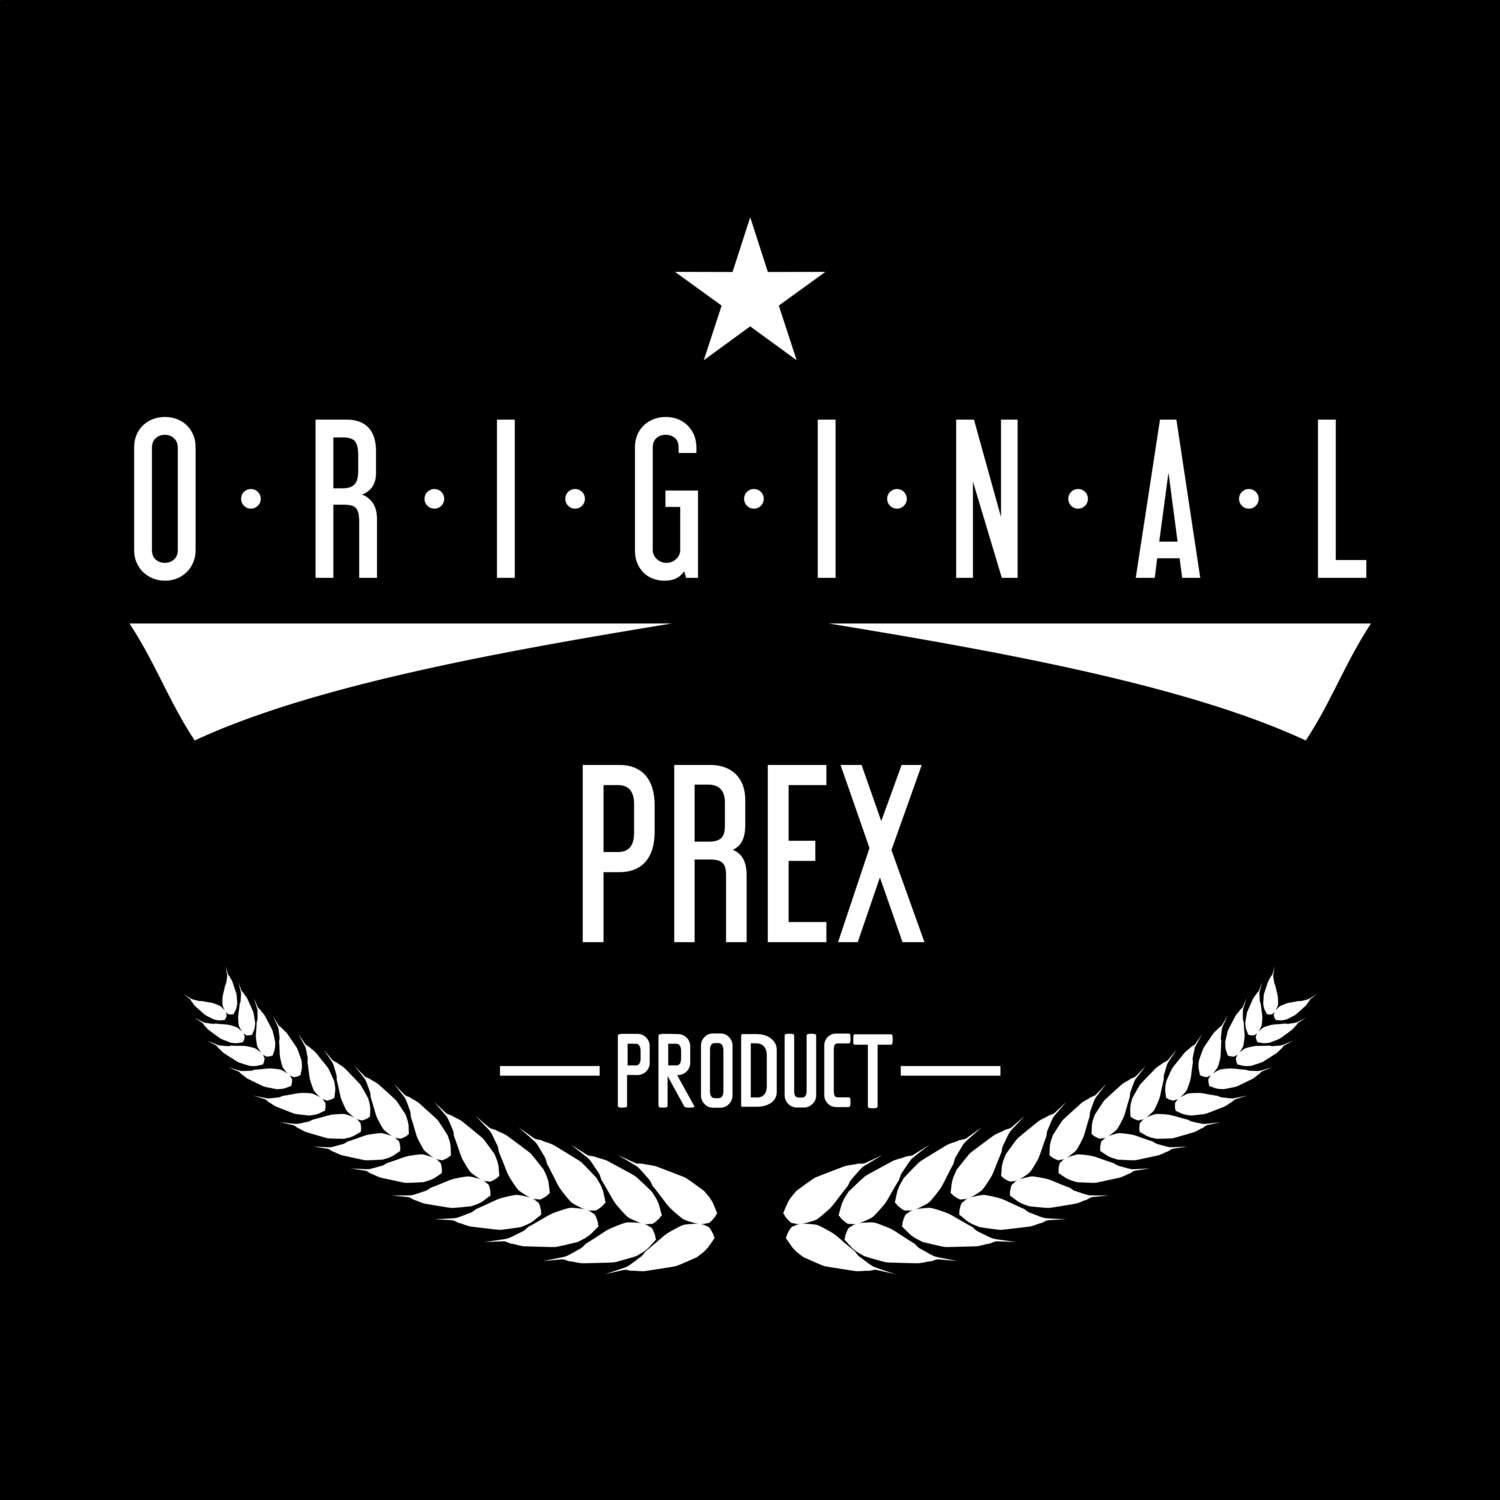 Prex T-Shirt »Original Product«